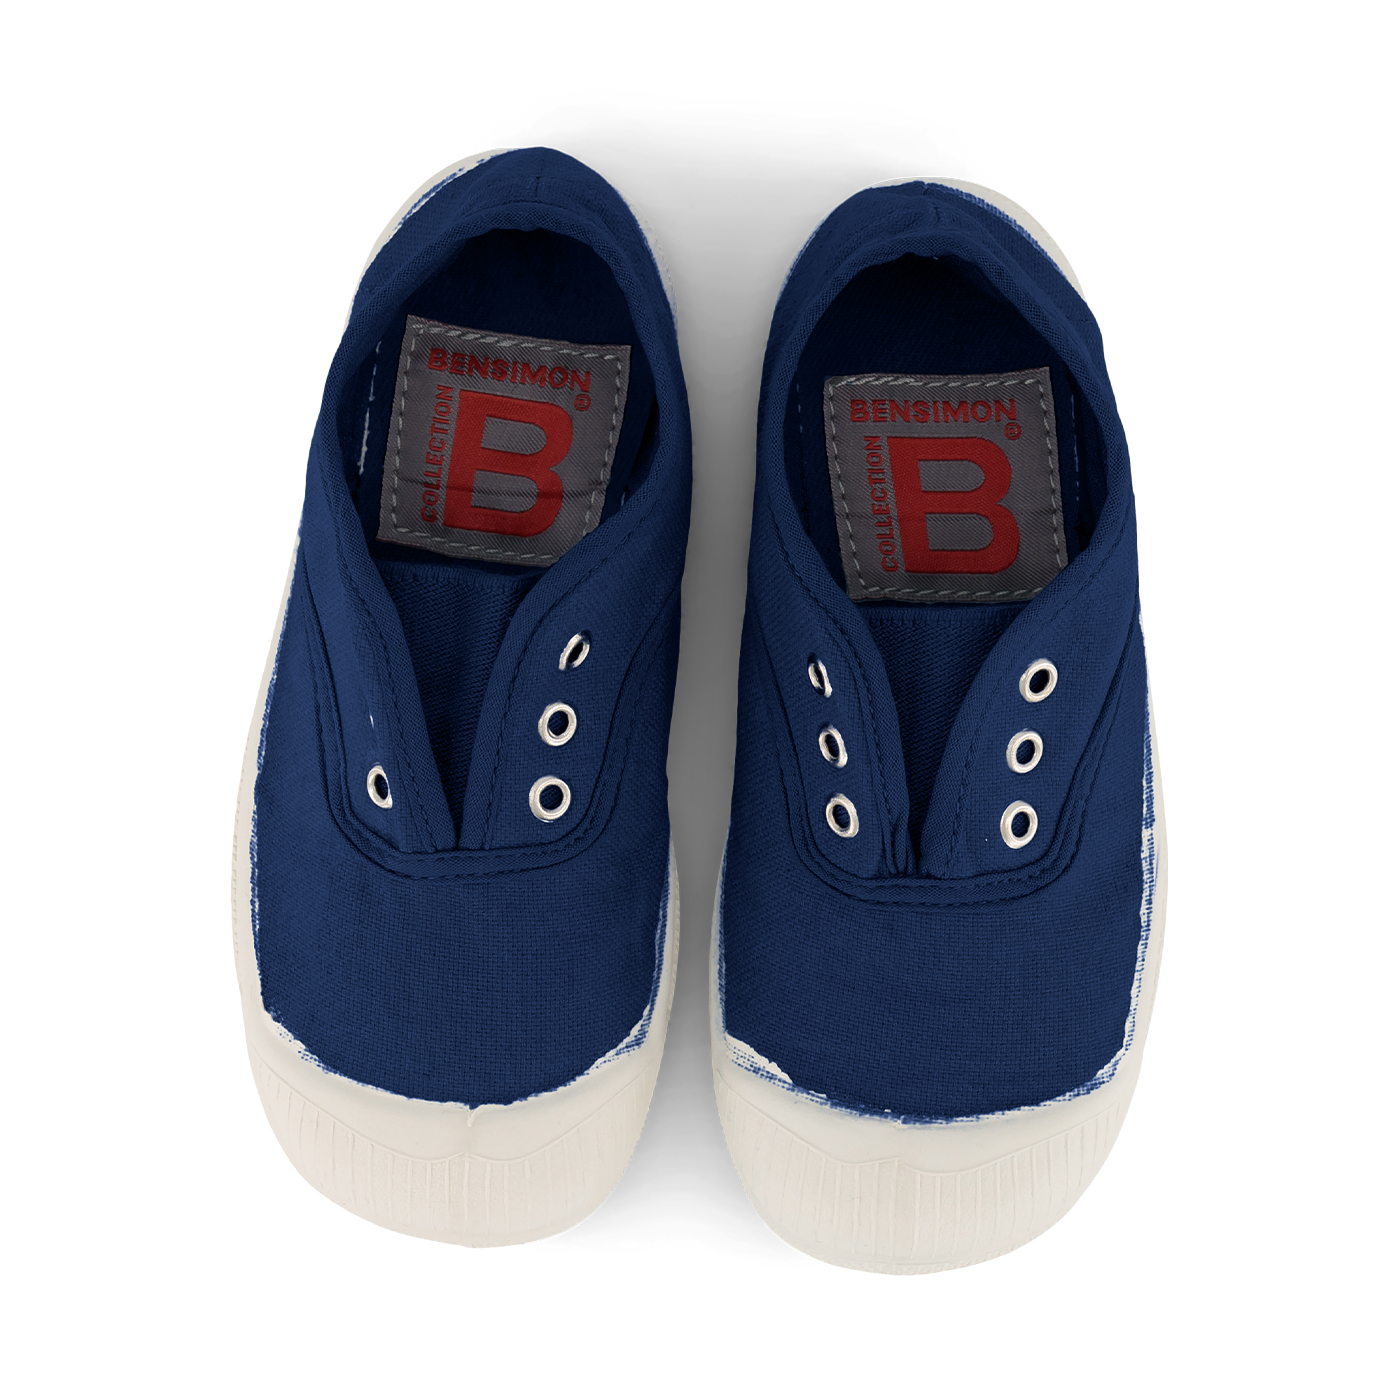 BENSIMON Bensimon Elly Çocuk Spor Ayakkabı  | Indigo